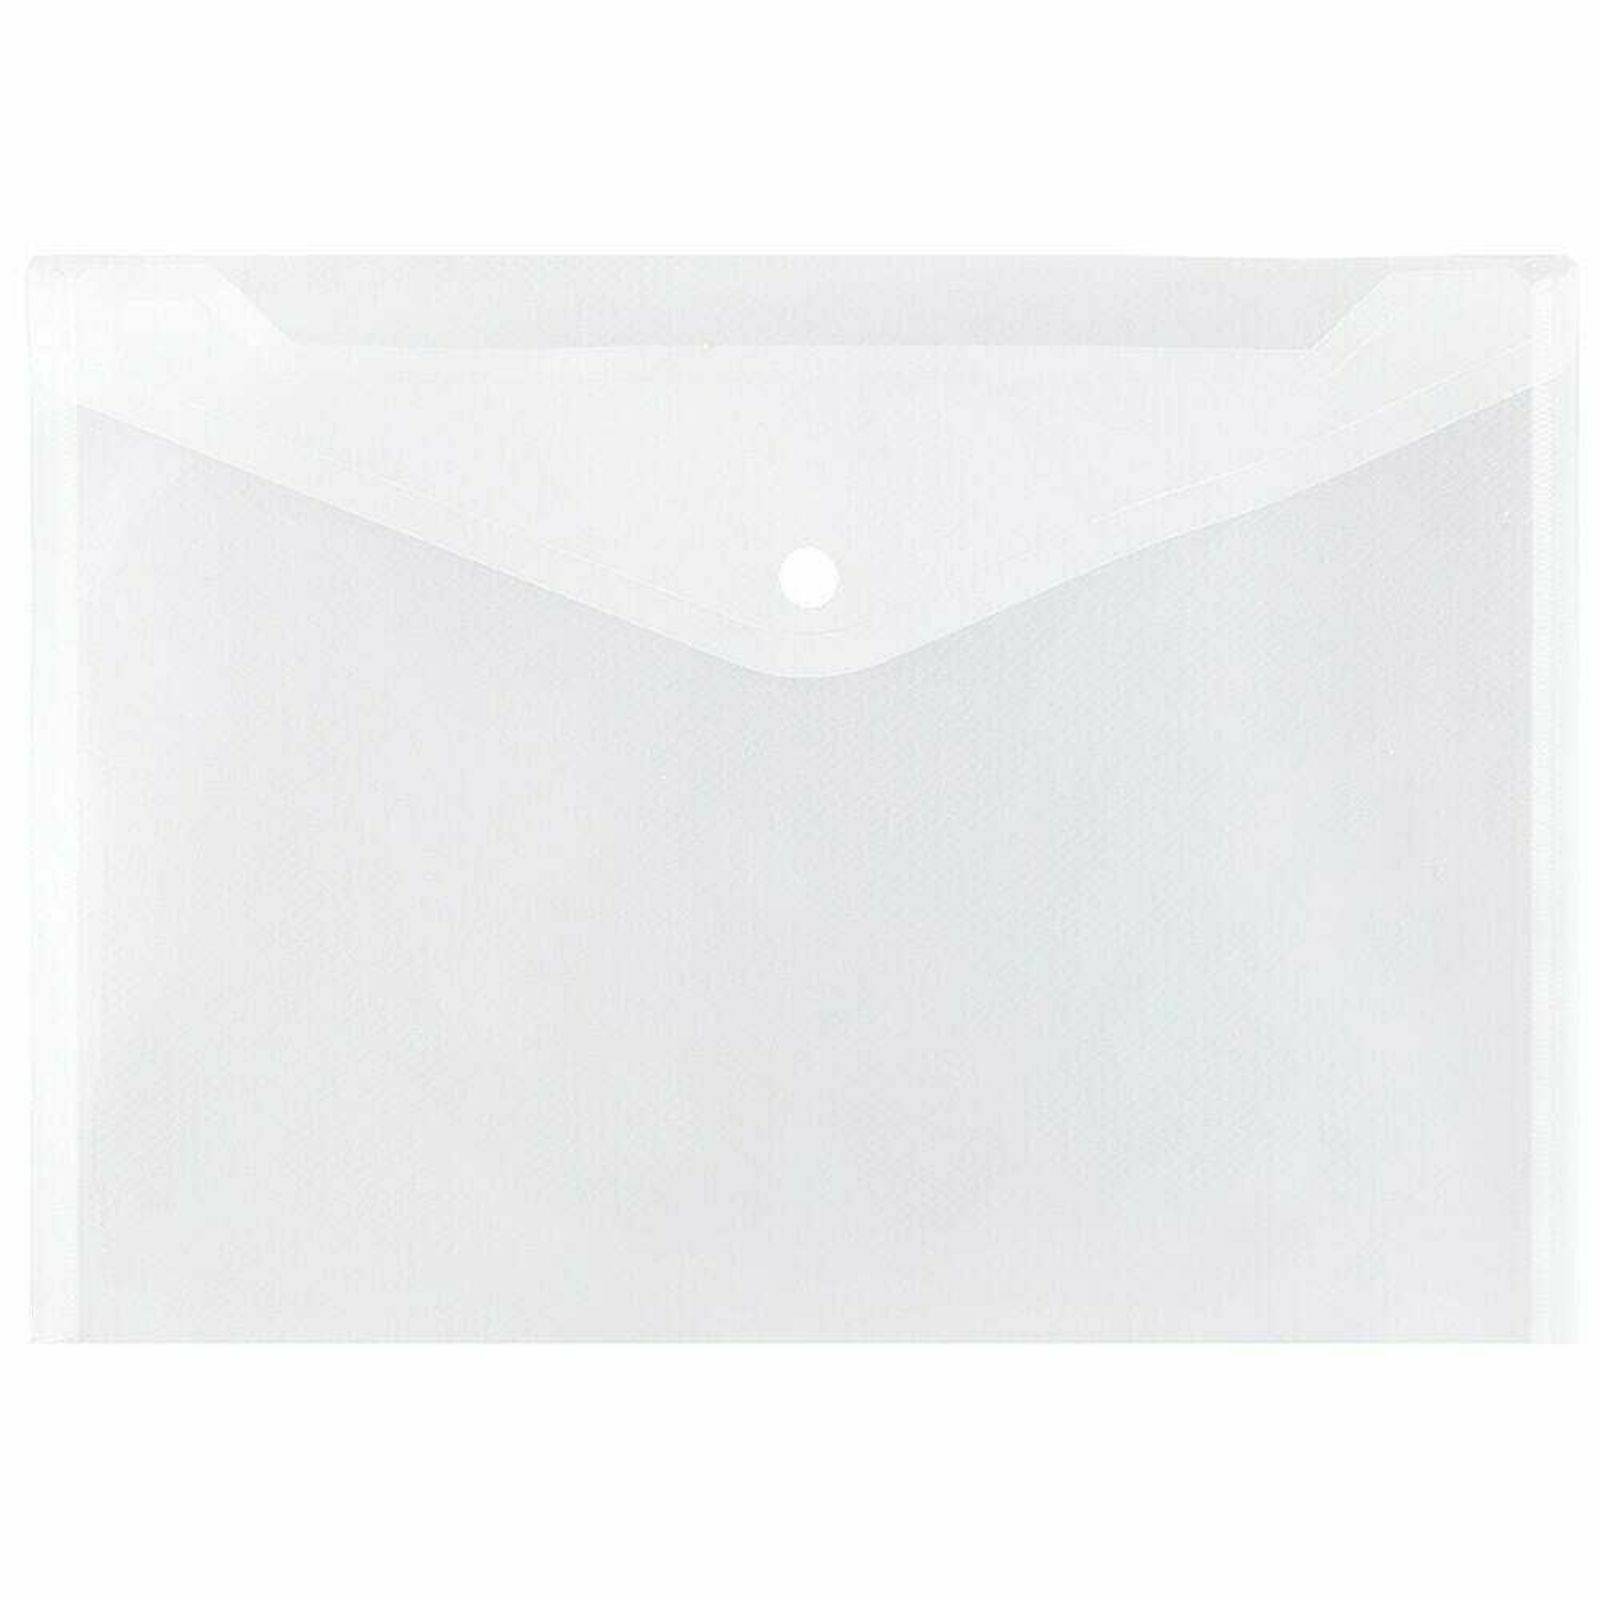 JAM Paper 9.75 x 13 Clear Plastic Snap Booklet Envelopes, 12ct.